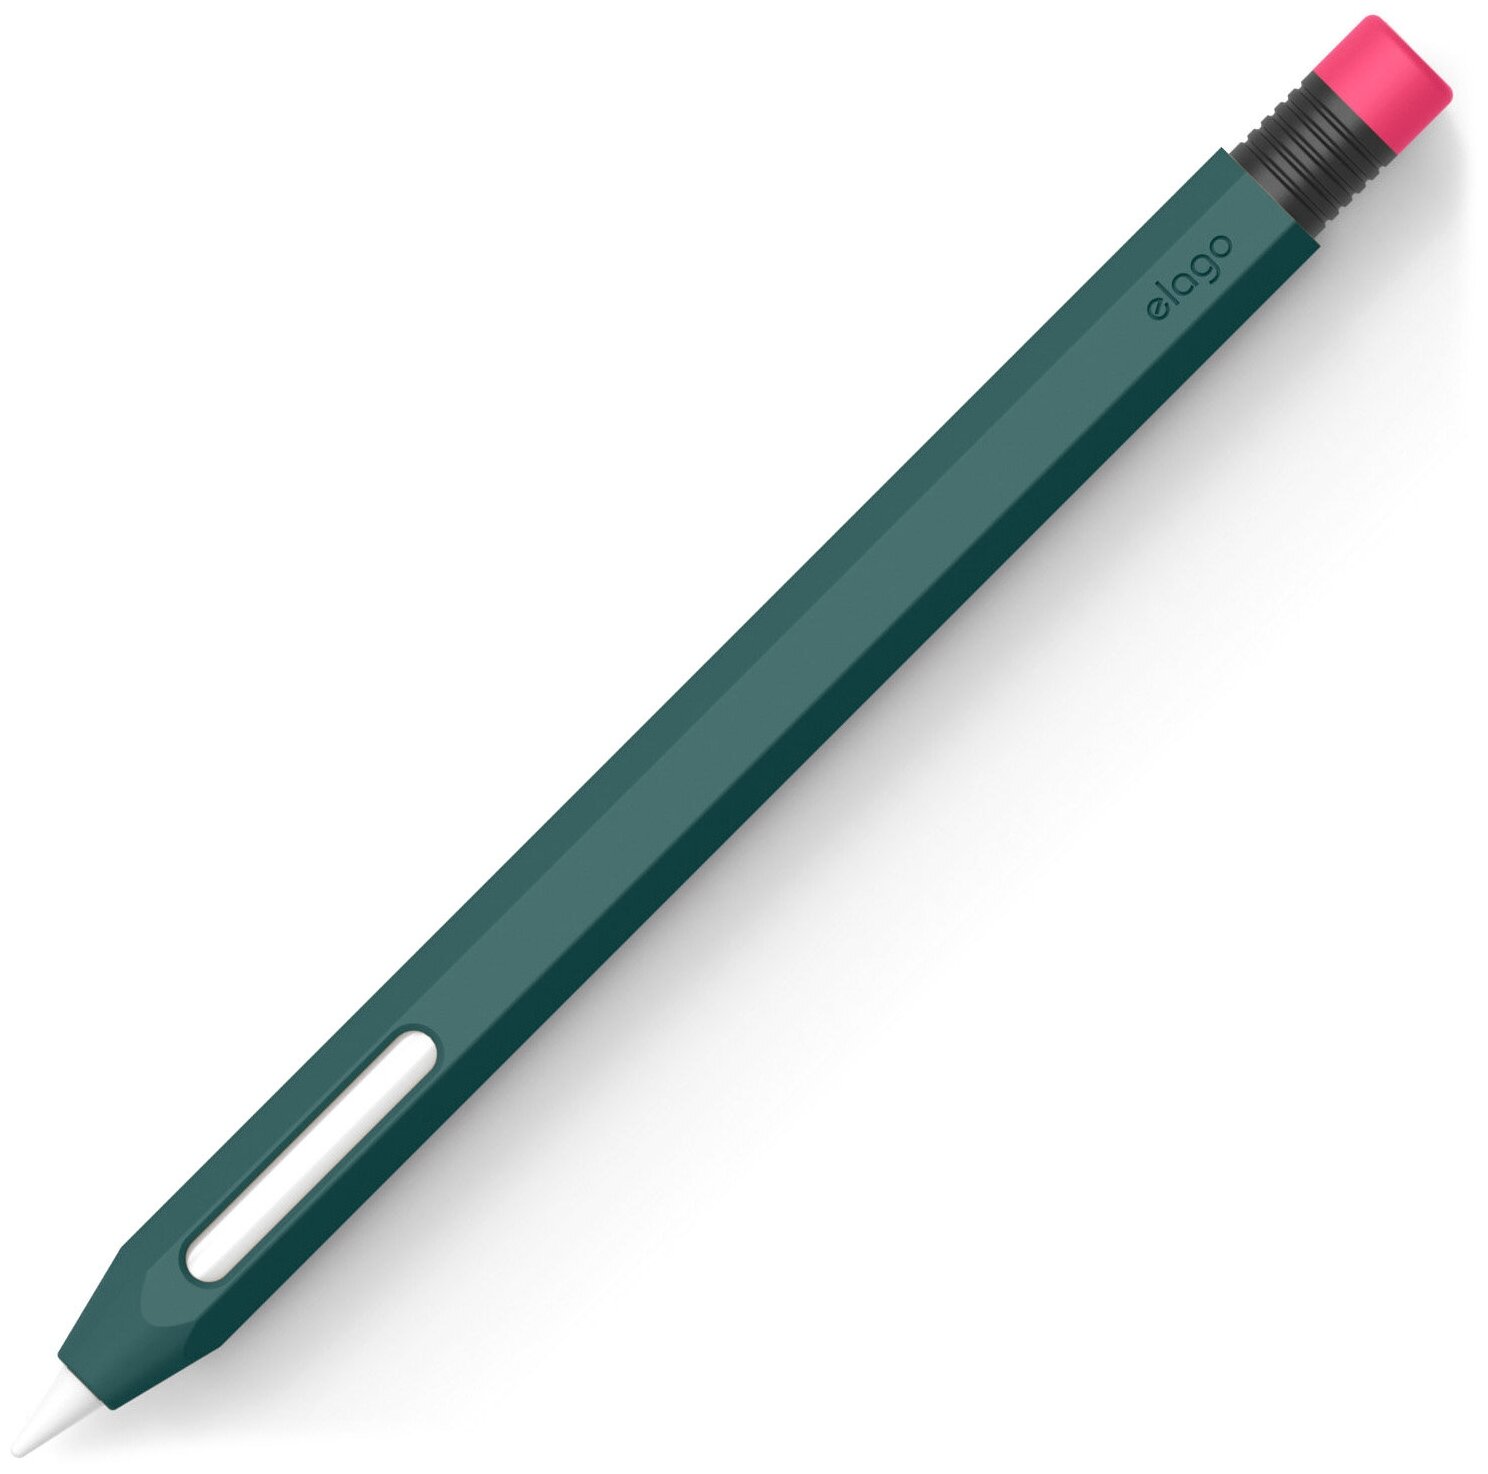 Чехол для Apple Pencil 2 Elago Silicone Case Midnight Green [EAPEN2-SC-MGR]